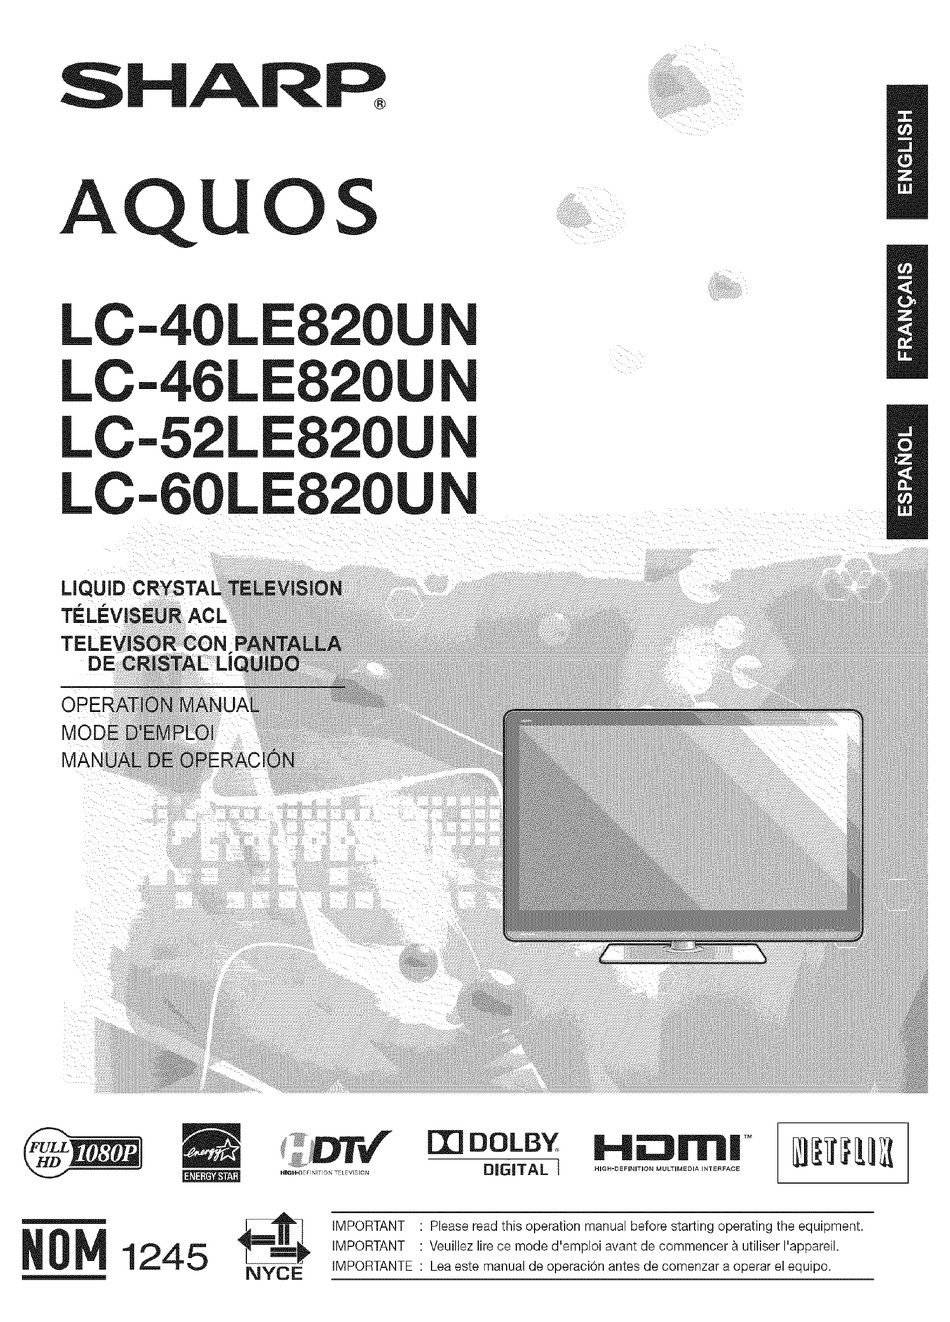 SHARP AQUOS LC-60LE820UN OPERATION MANUAL Pdf Download | ManualsLib